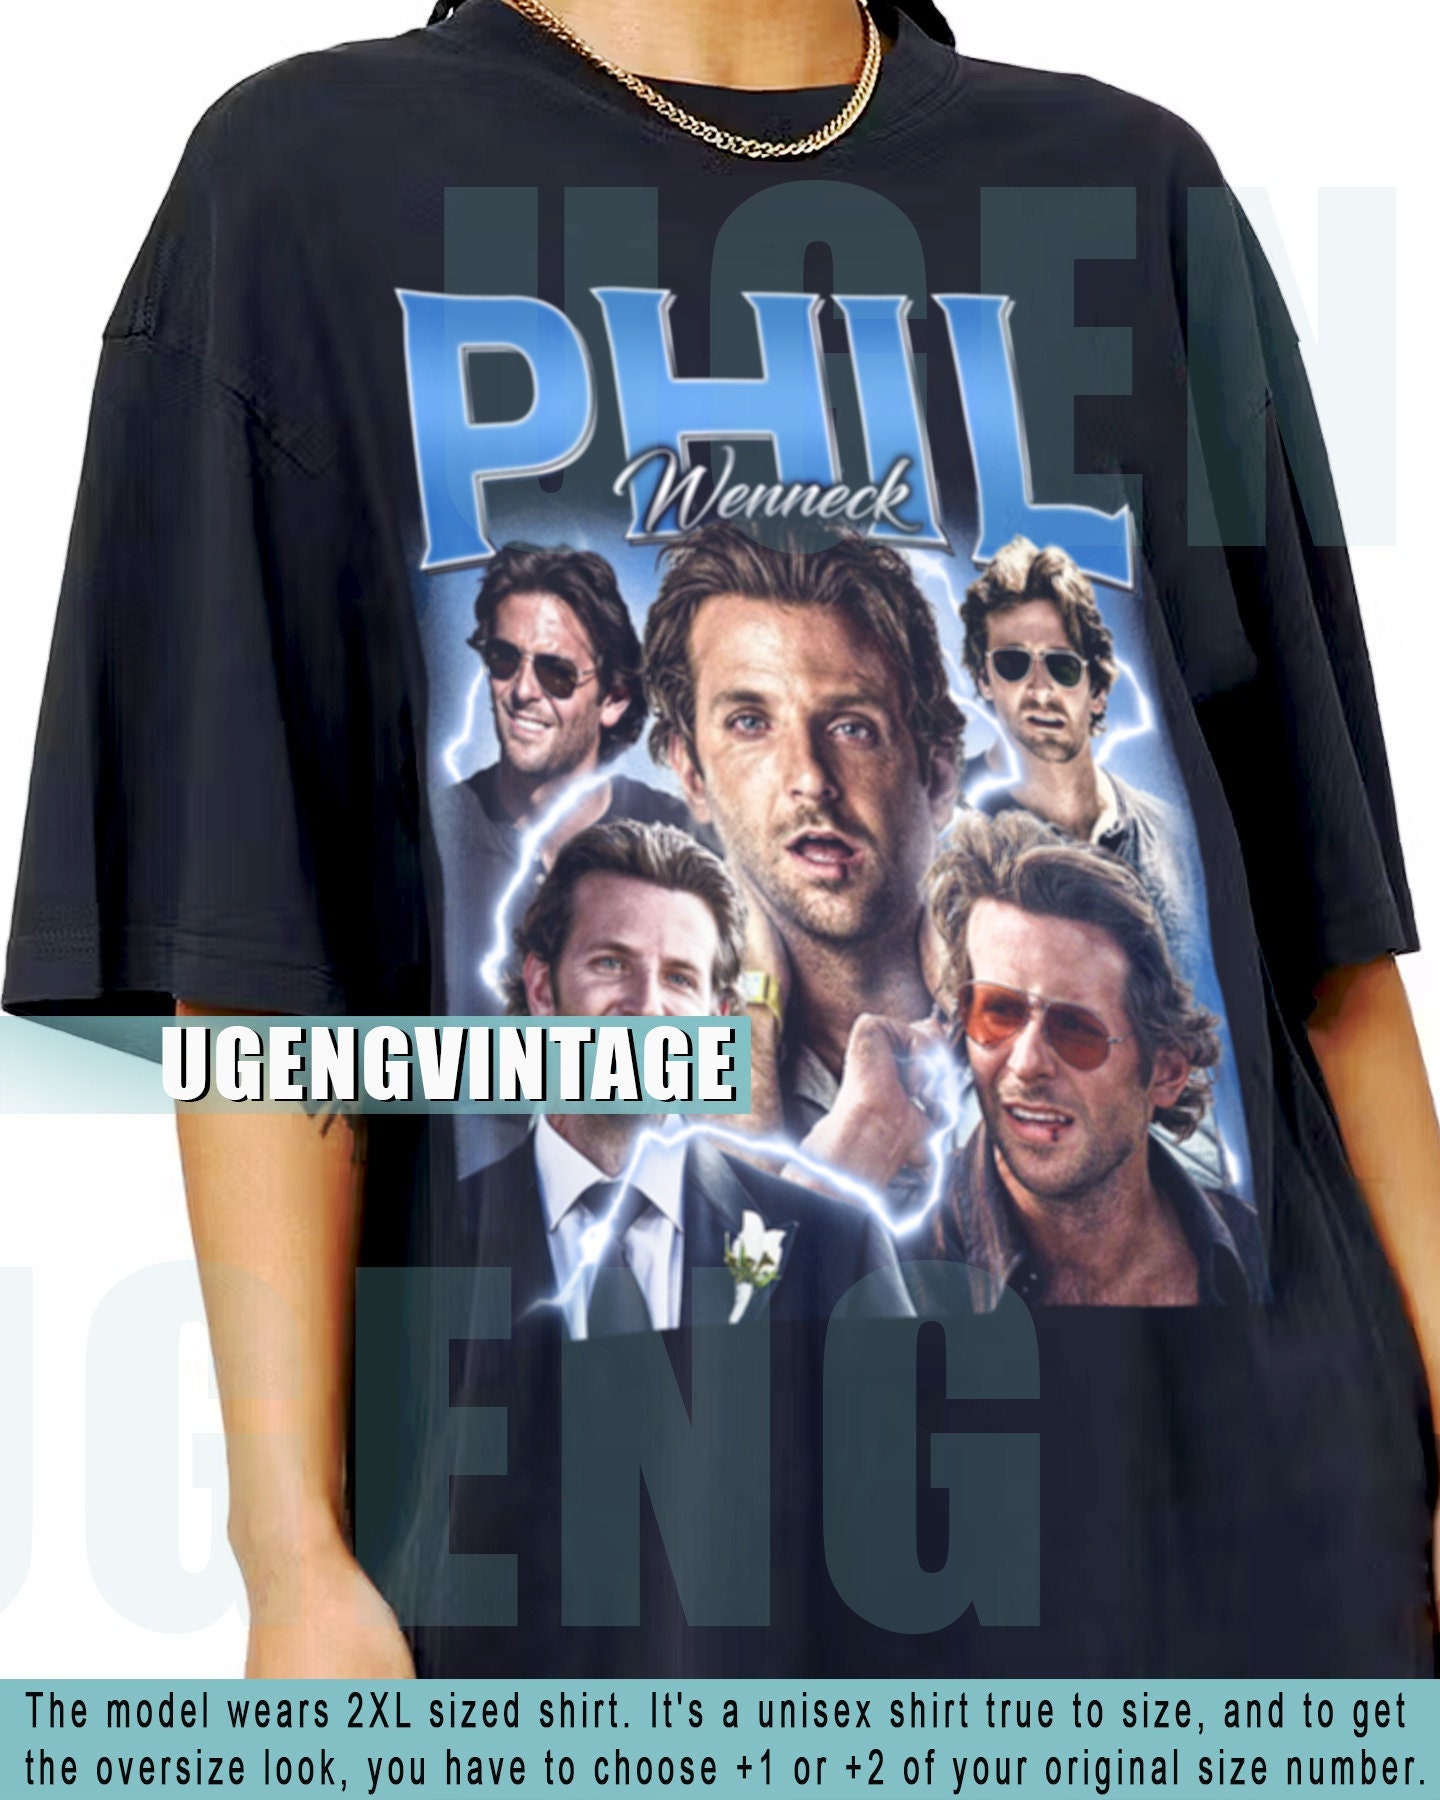 Long sleeve black t-shirt worn by Phil Wenneck (Bradley Cooper